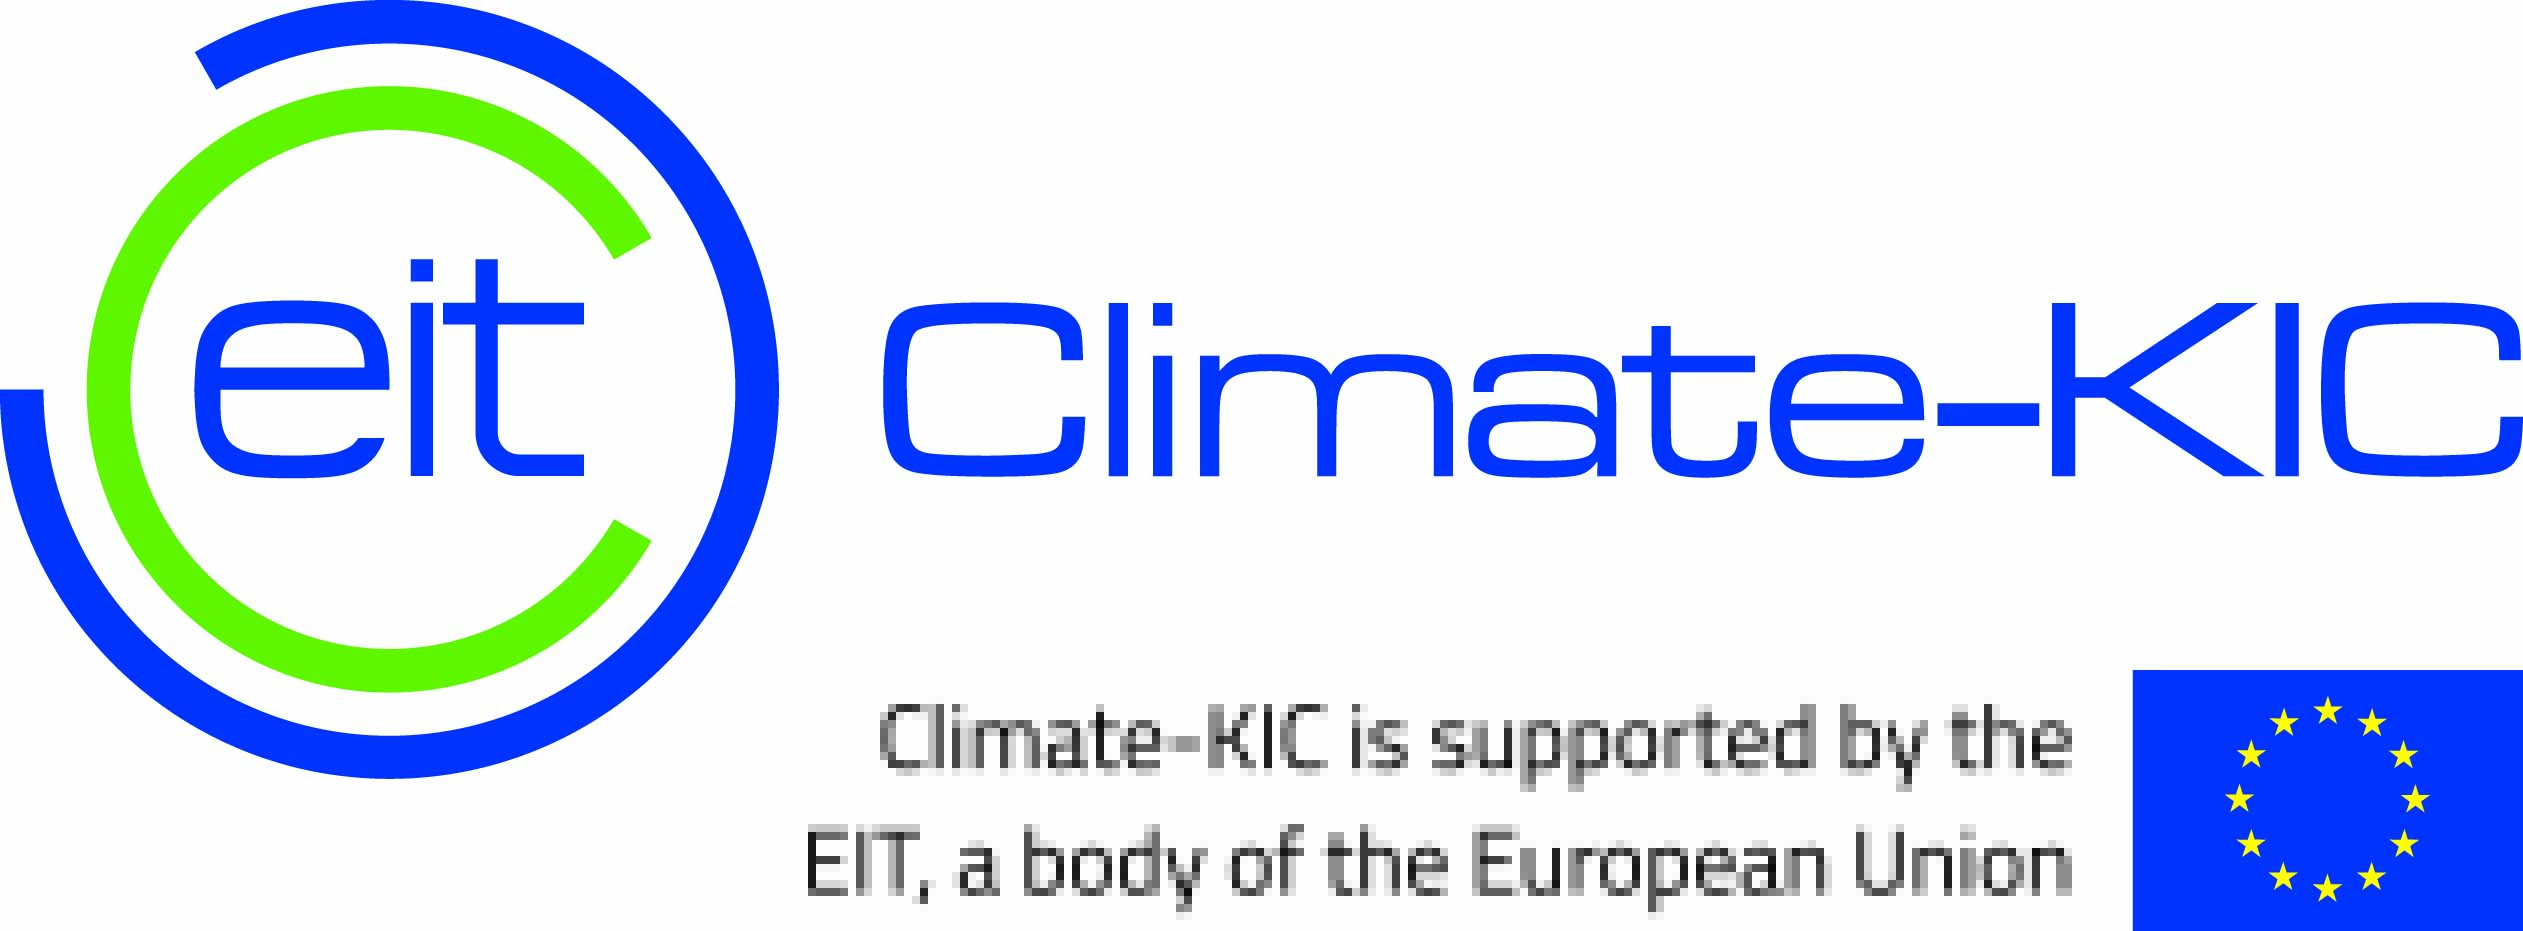 EIT Climate-KIC + EU flag